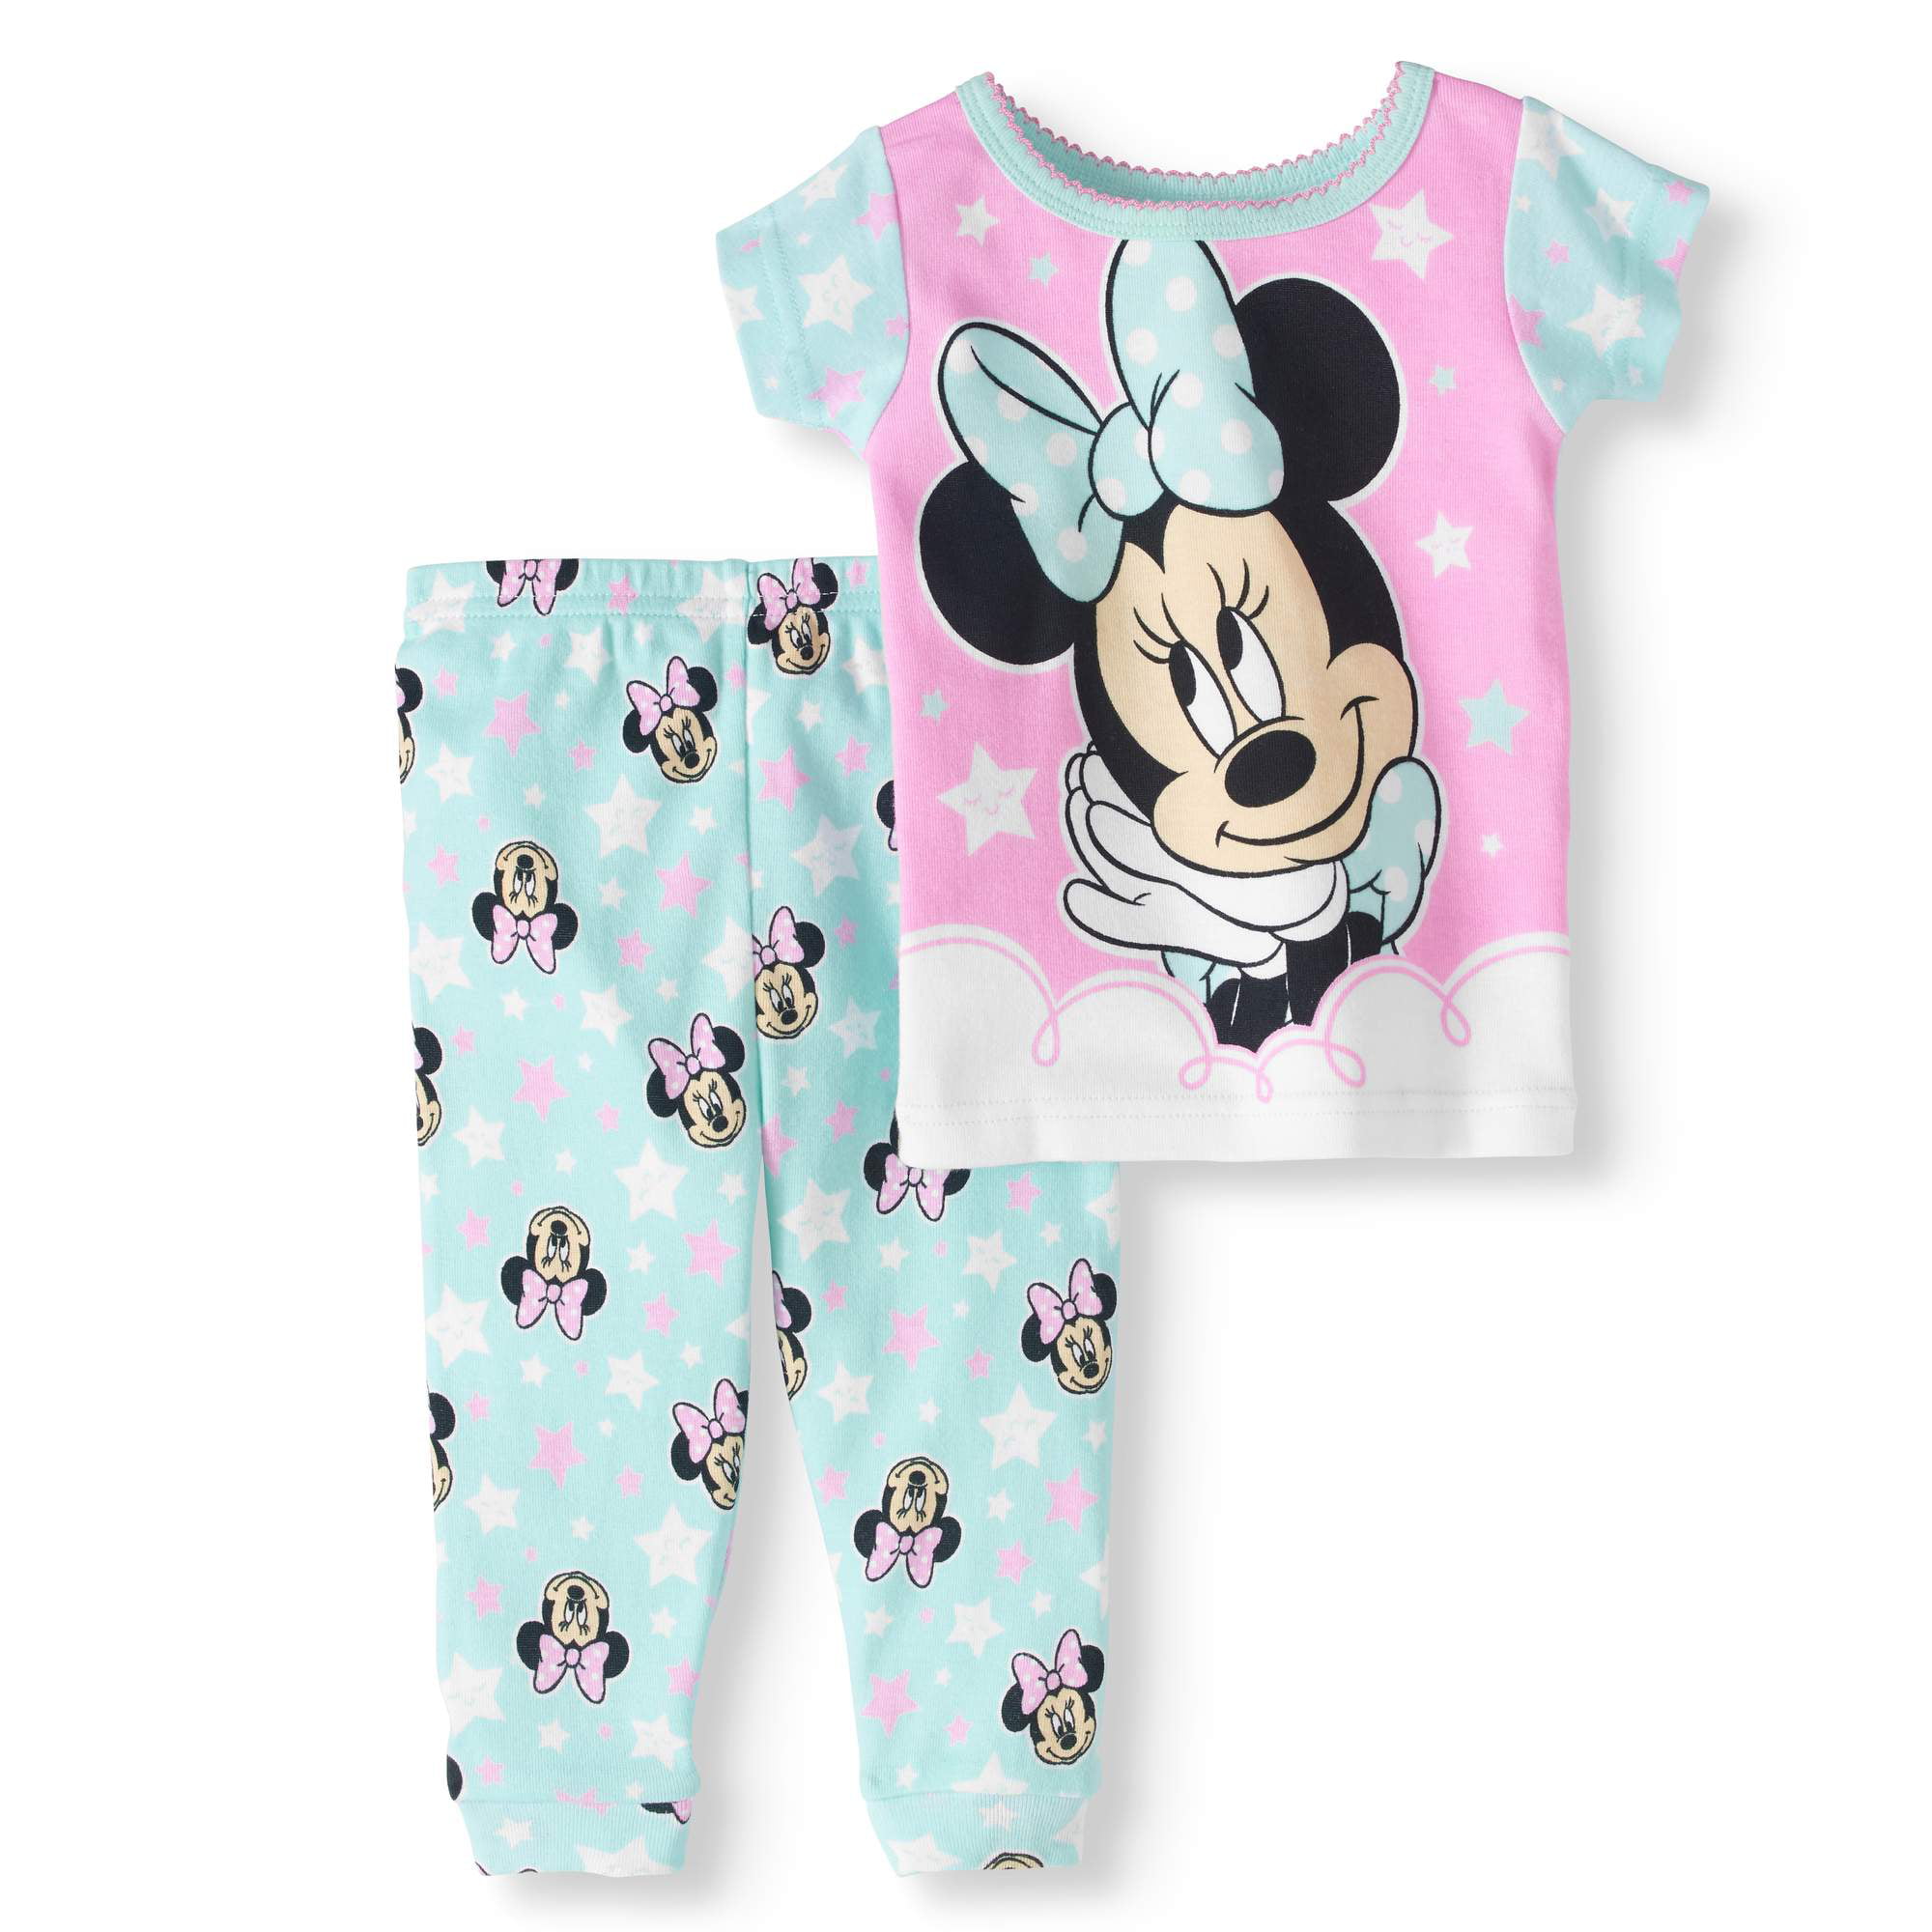 Minnie Mouse Baby girl cotton tight fit pajamas, 2pc set - Walmart.com